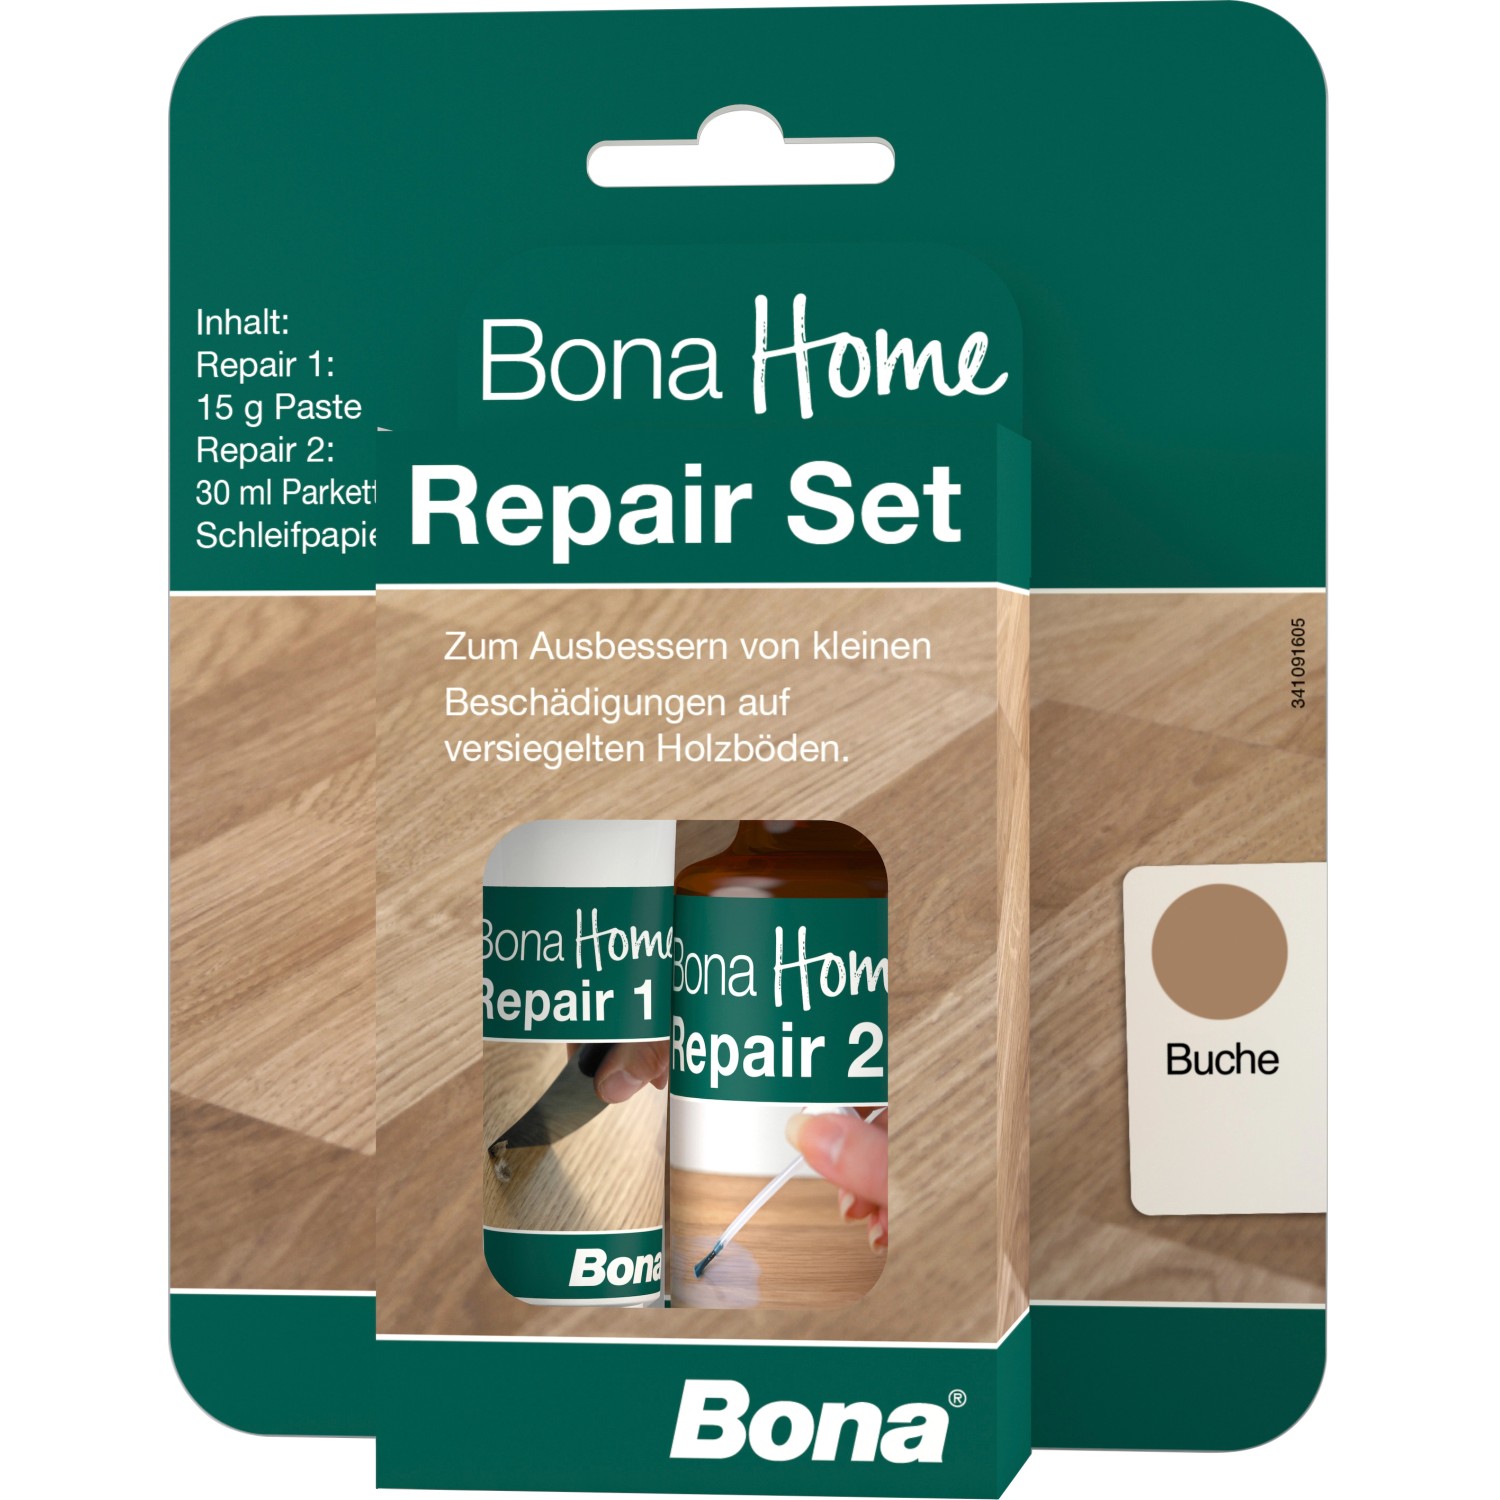 Bona Home Repair Set Buche von Bona